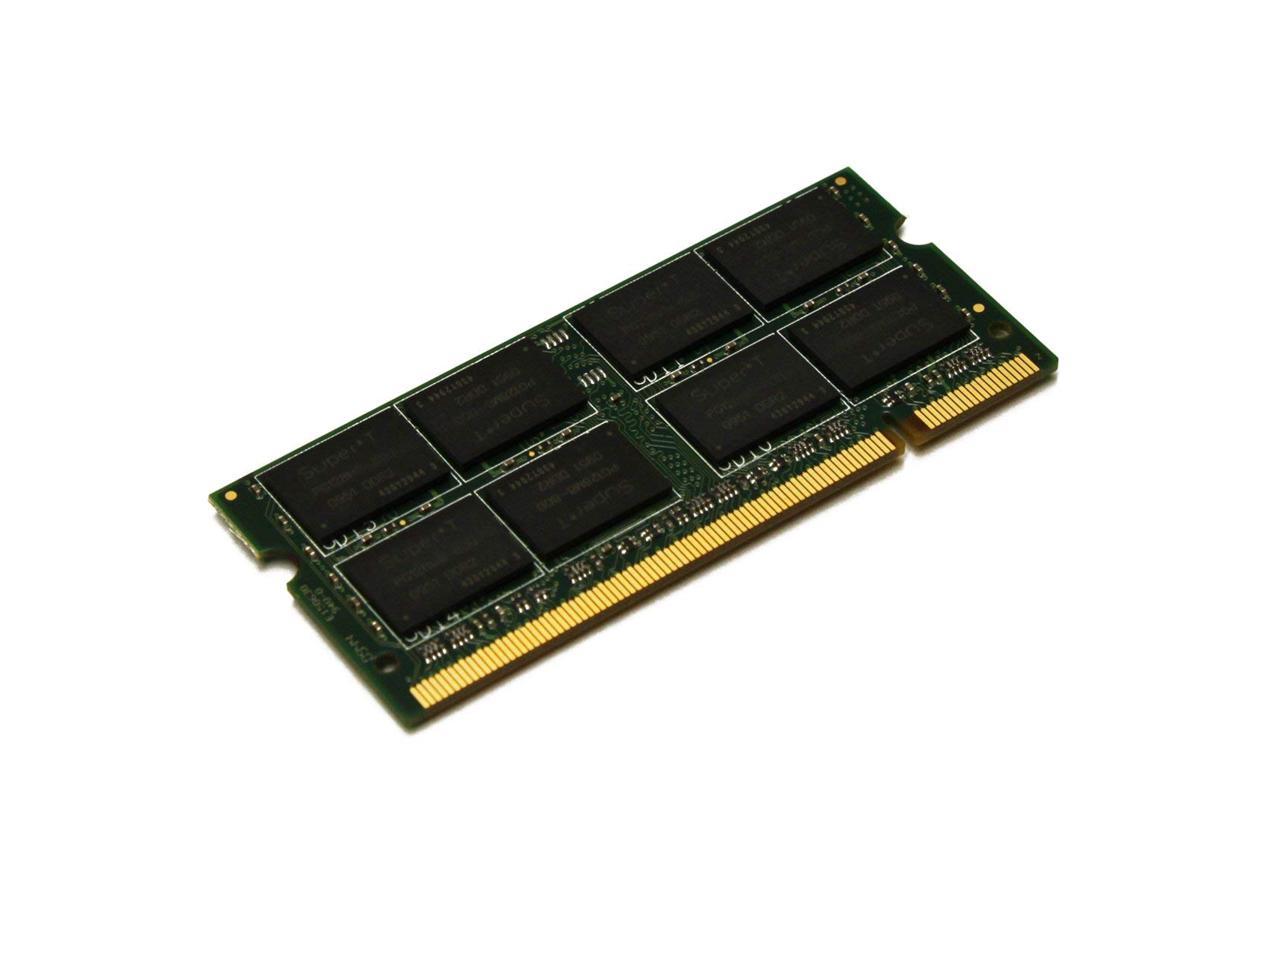 Super Talent 16GB DDR4 SODIMM 2400MHz PC4-19200 Notebook Memory model F24SB16GS